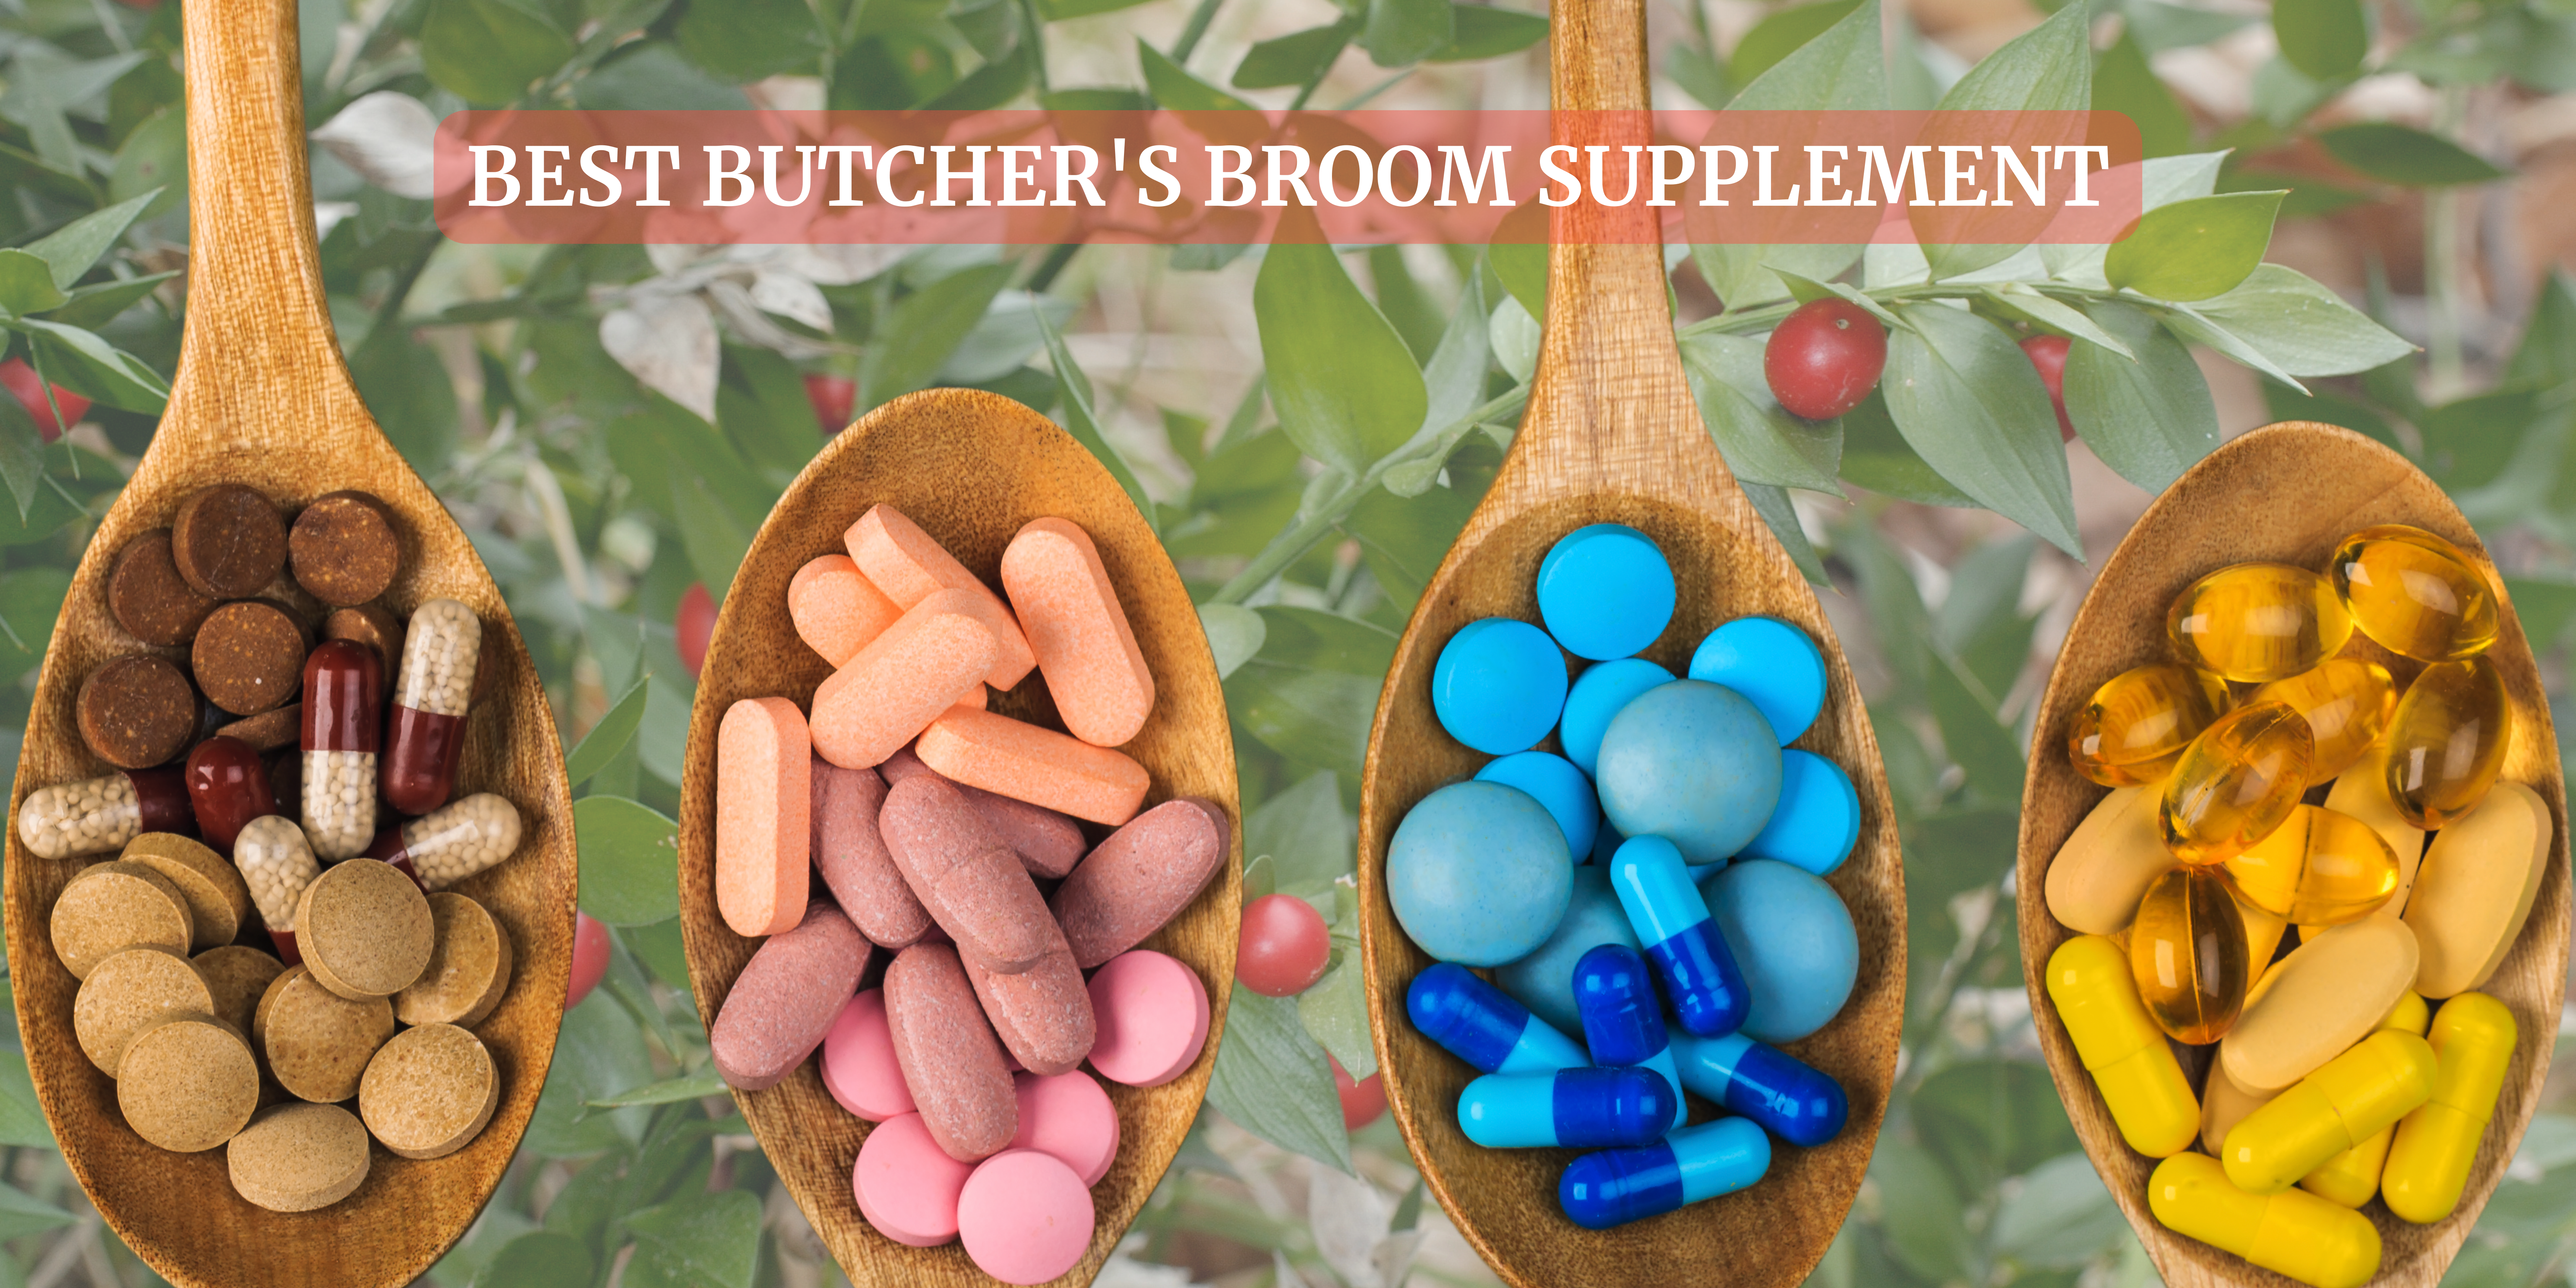 butcher's broom supplement in USA